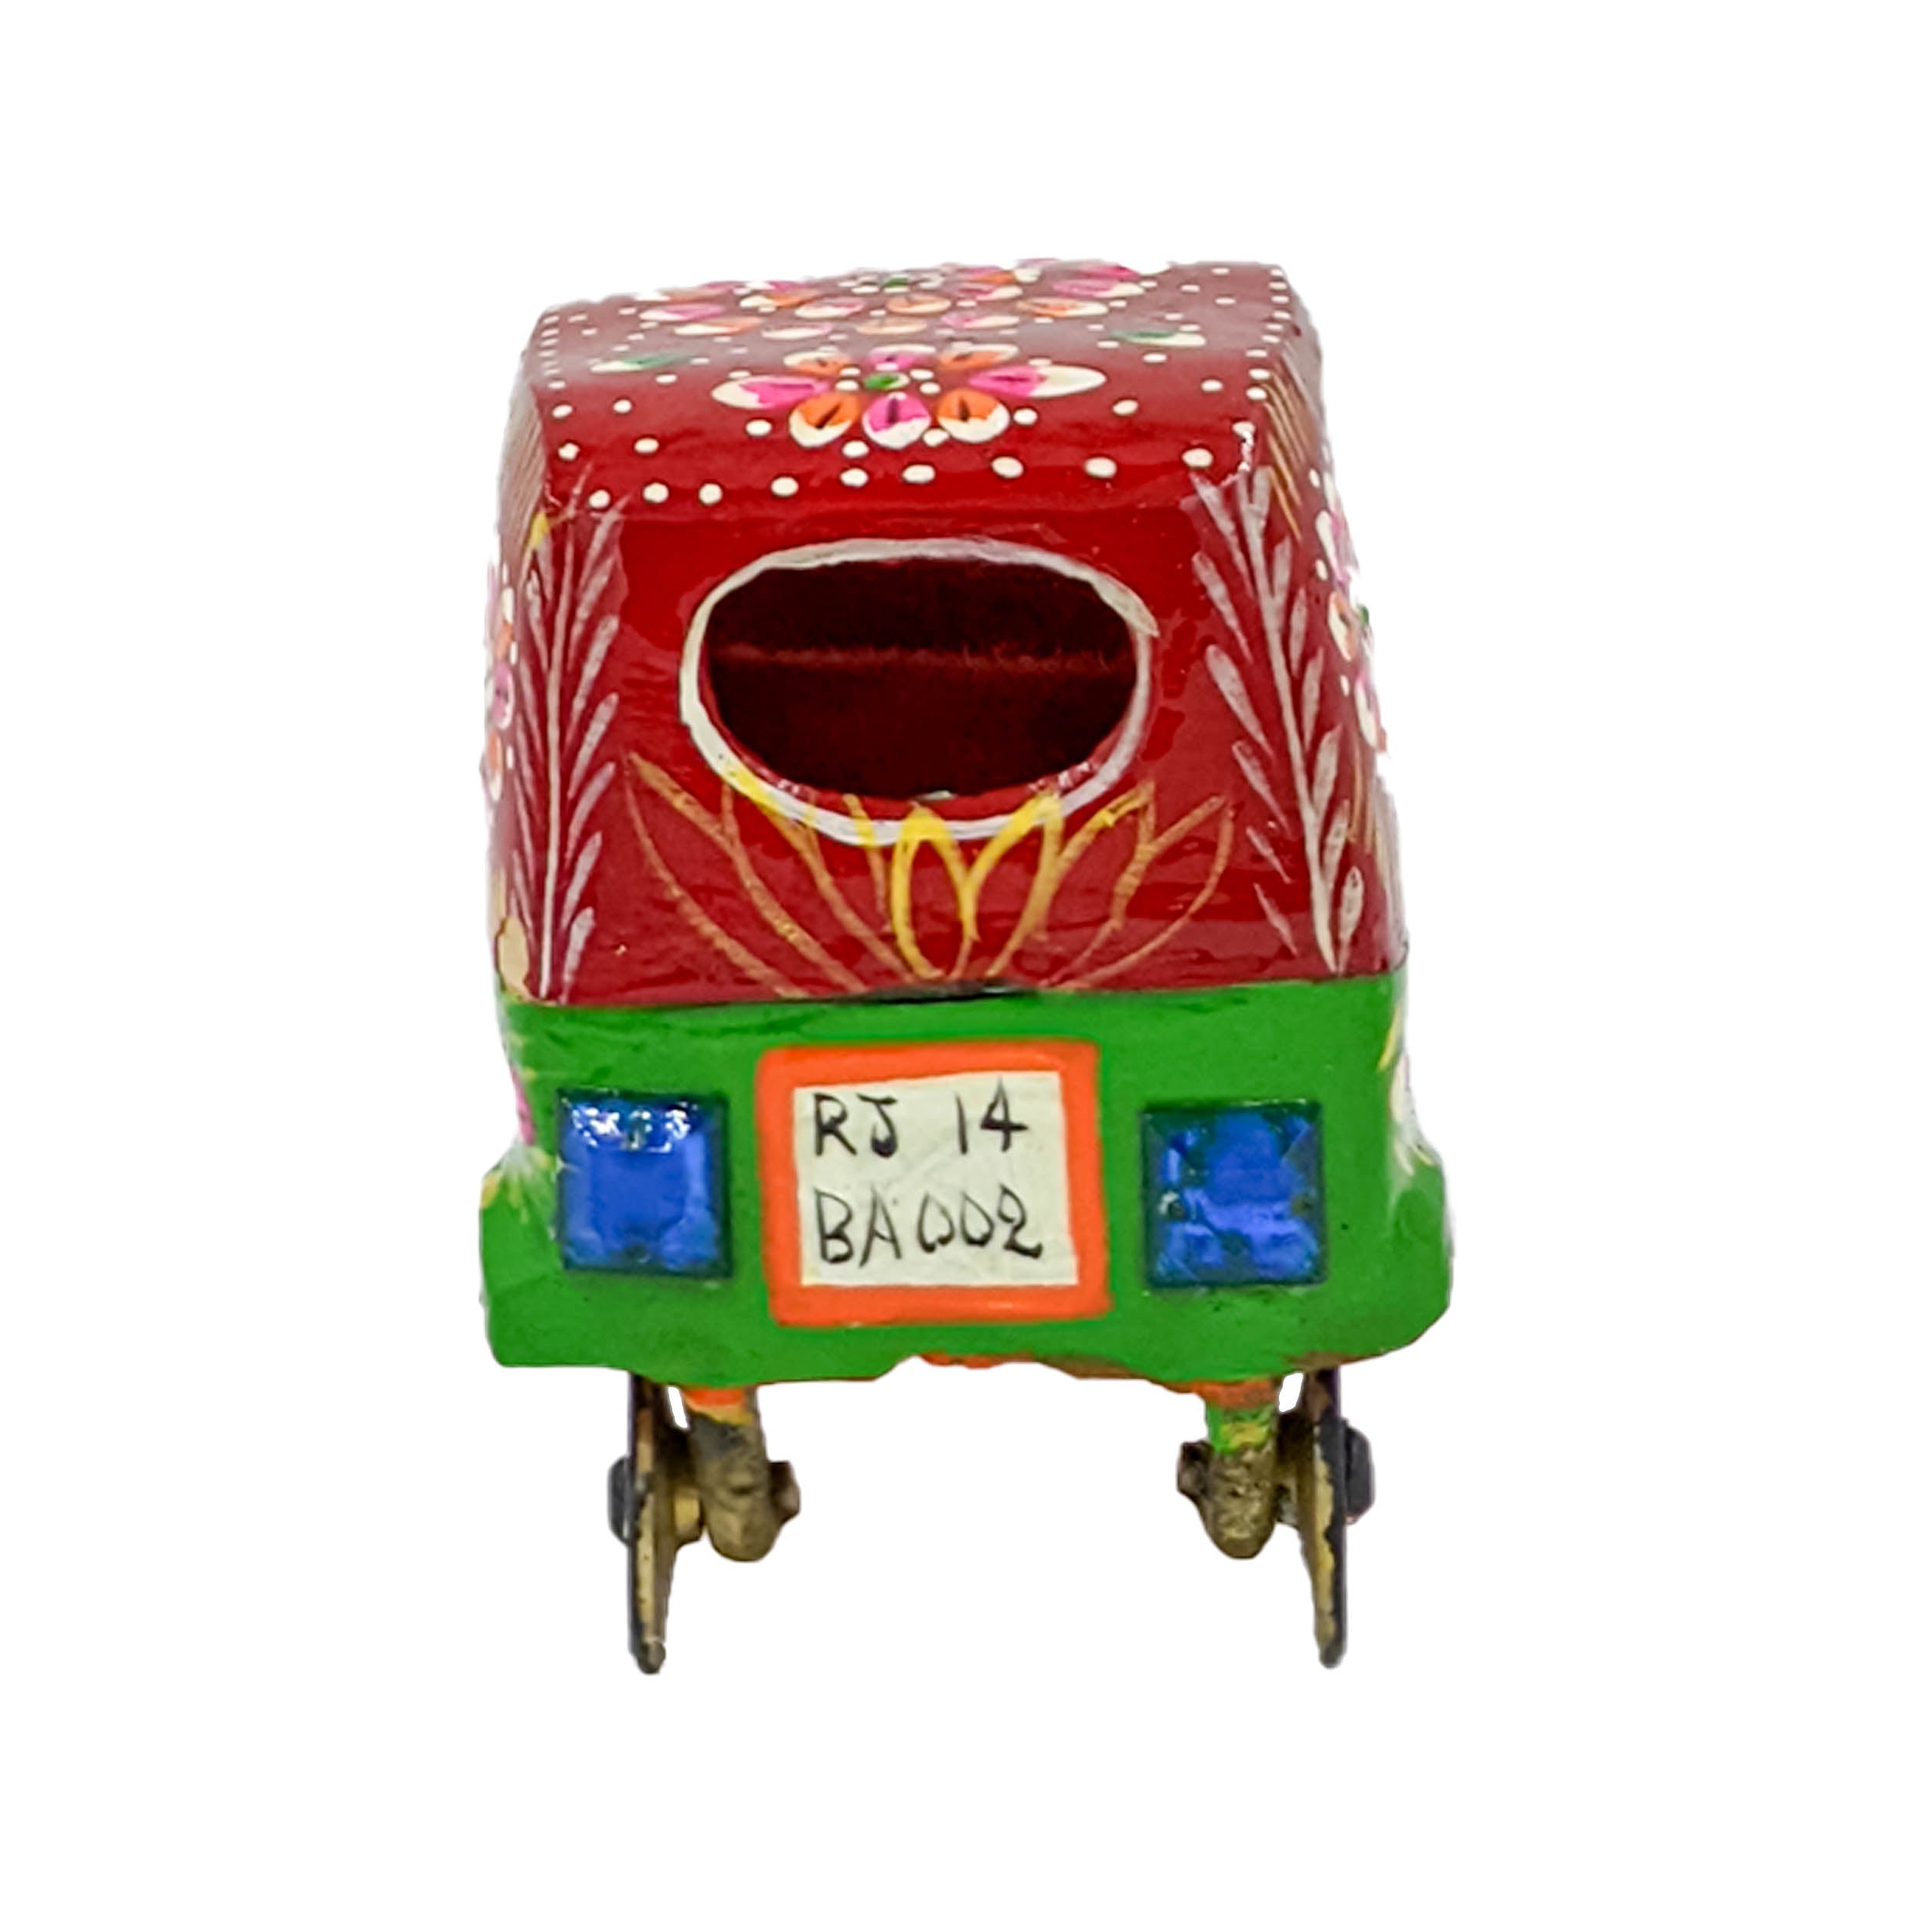 Metal Antique Auto Rickshaw Model Tin Home Décor Decoration Ornaments Handmade Handcrafted Vehicle Toys